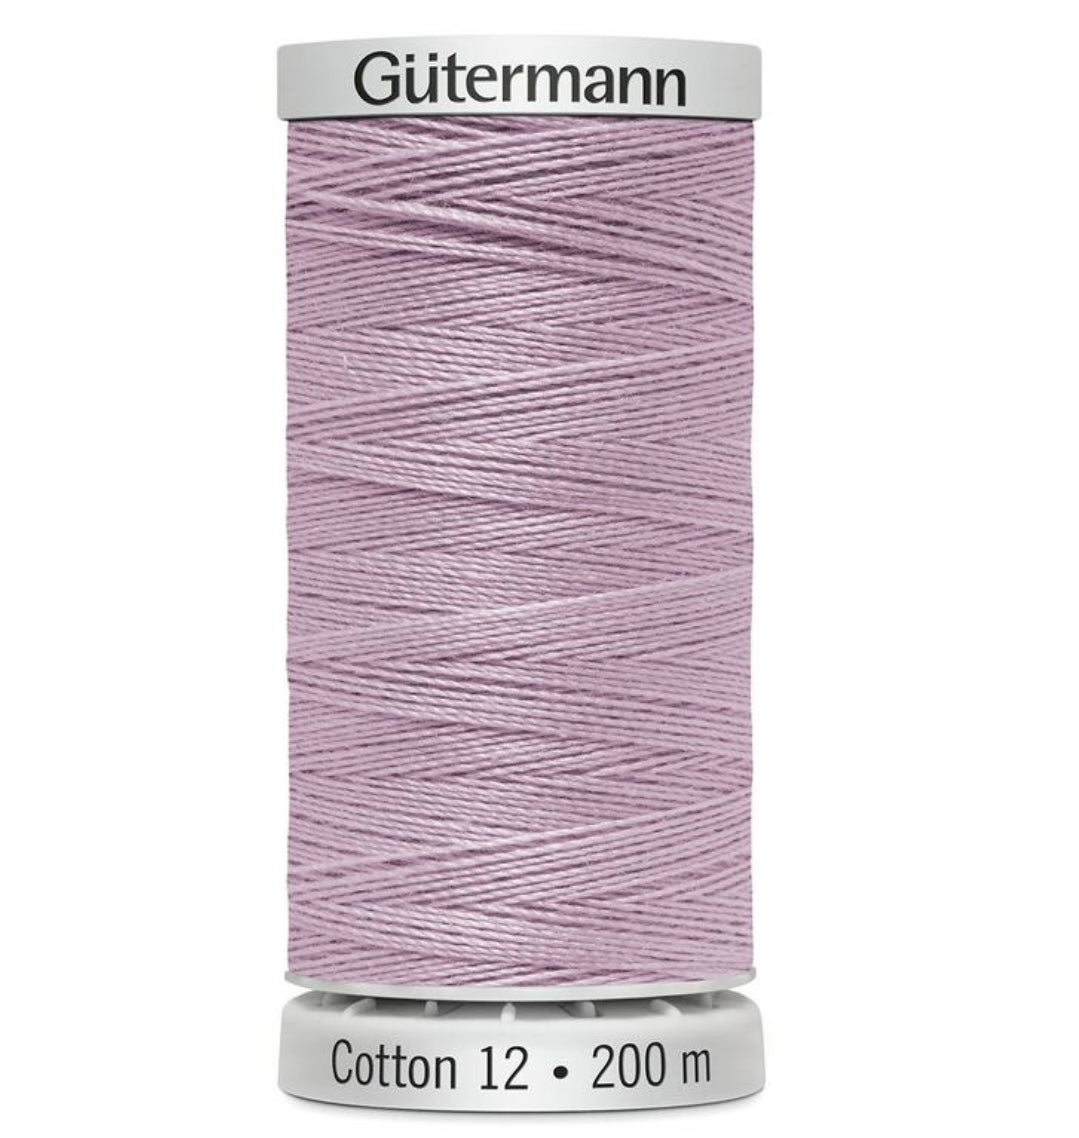 Gütermann 1031 Ultra Light Violet Cotton 12